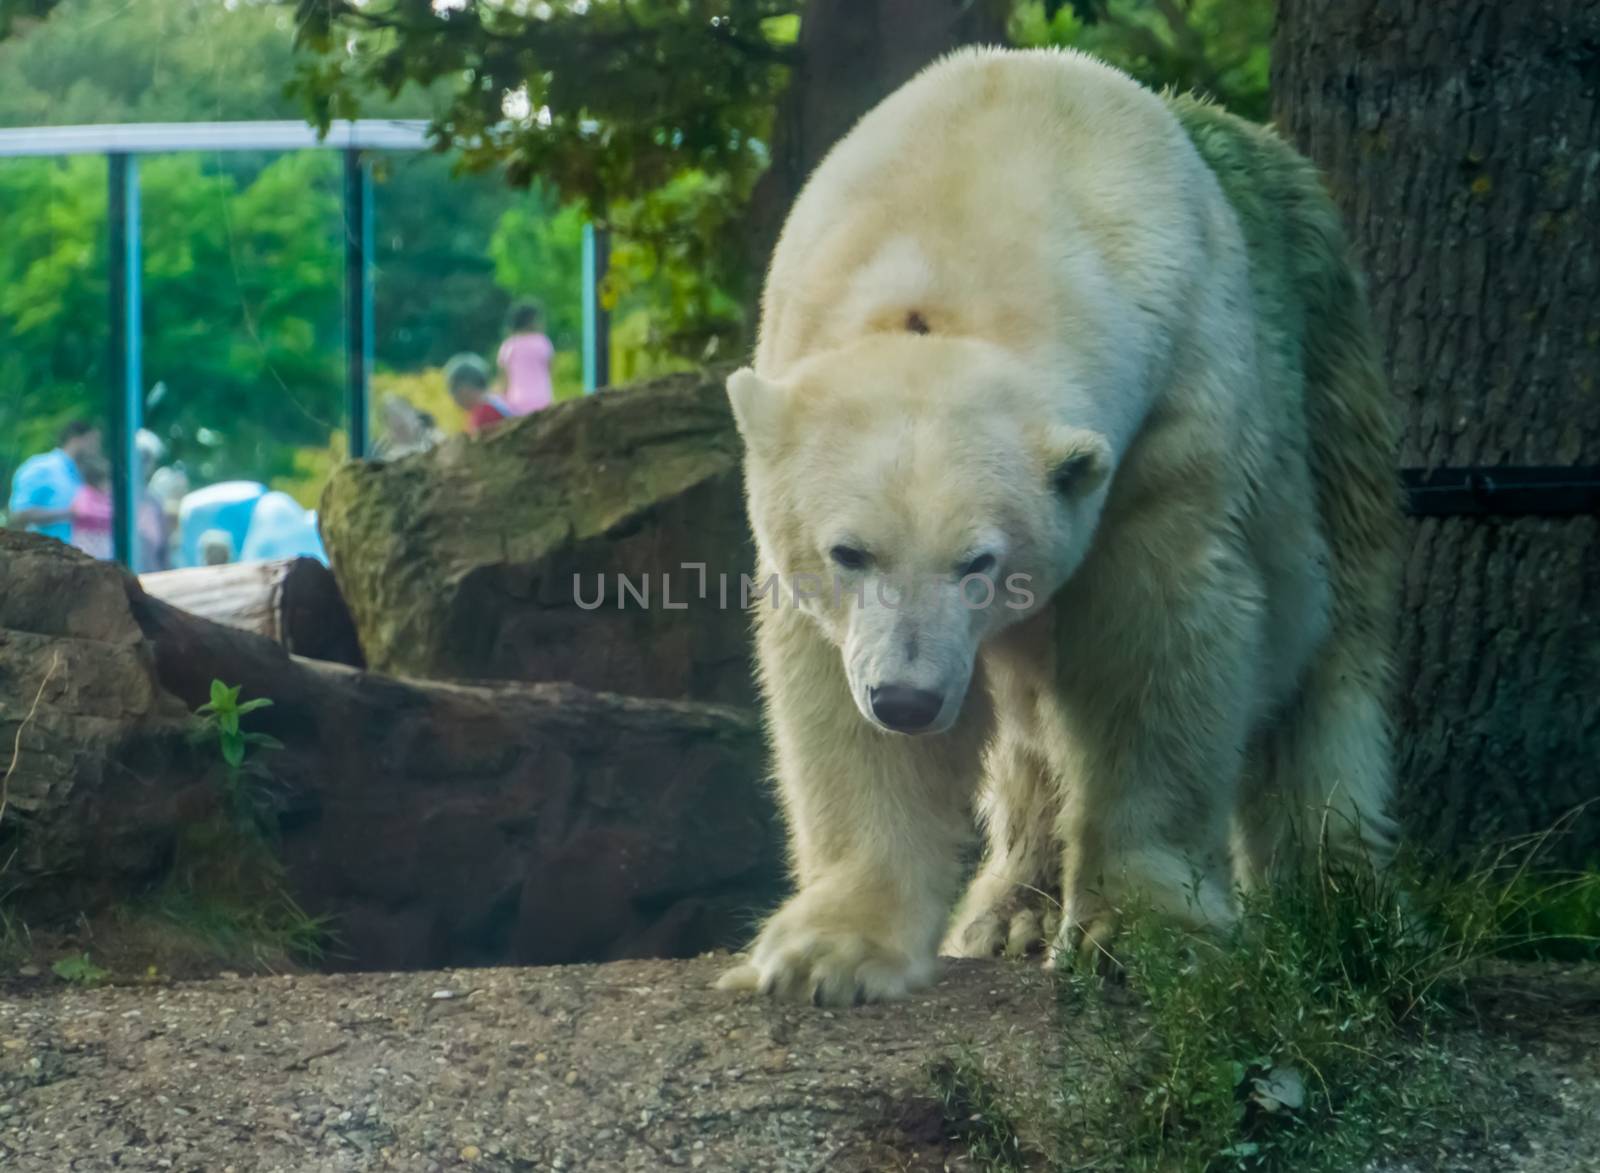 polar bear in closeup, Vulnerable animal specie from the arctic coast, popular zoo animals